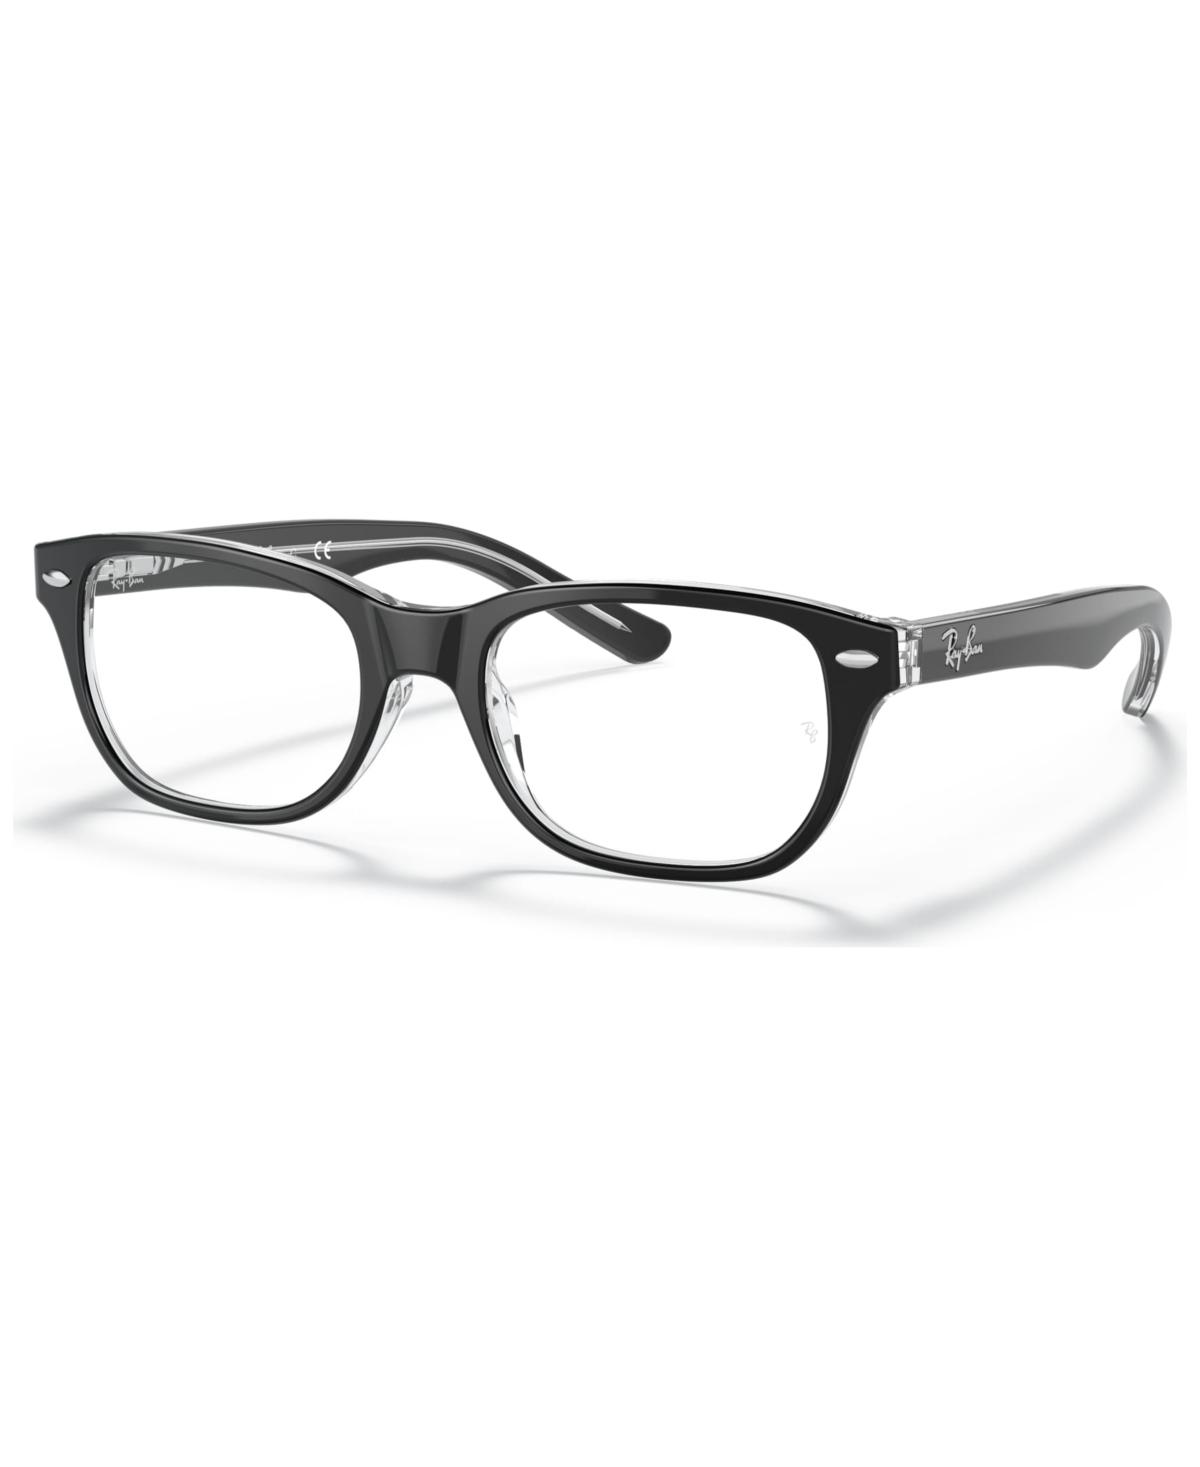 RY1555 Child Square Eyeglasses - Black